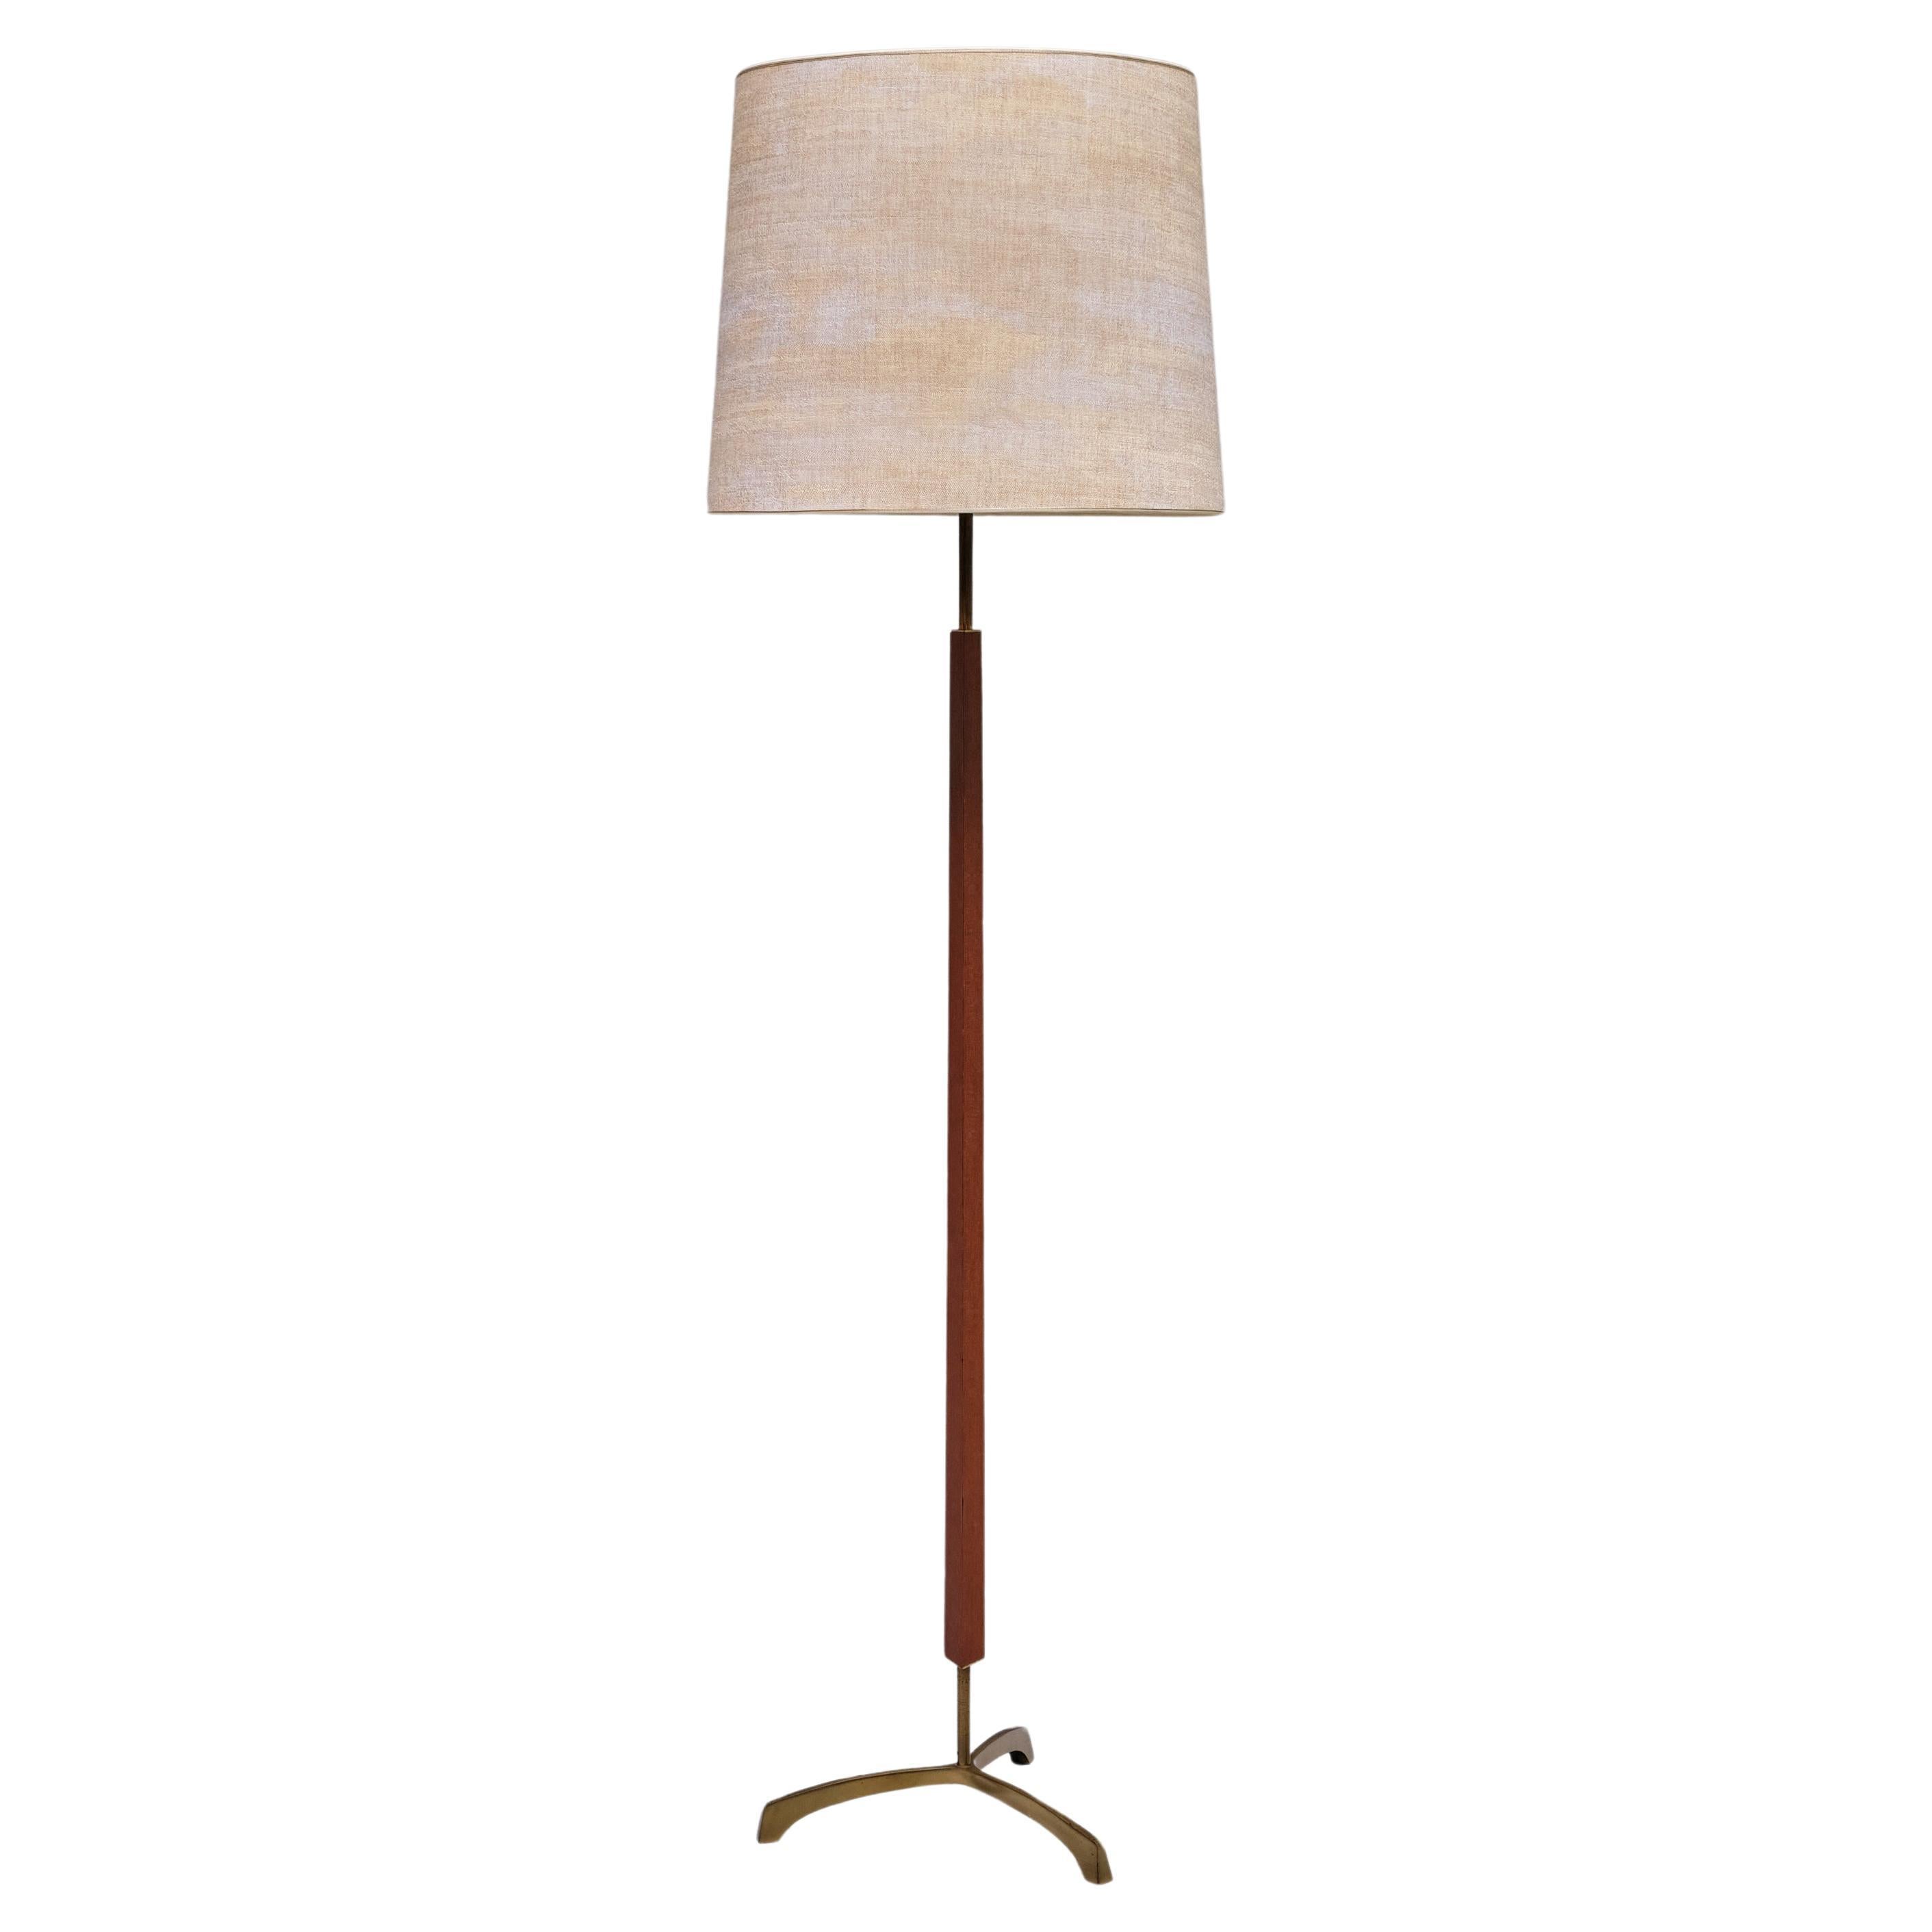 Danish Modern Three Legged Floor Lamp in Brass, Teak and Textured Shade, 1950s For Sale